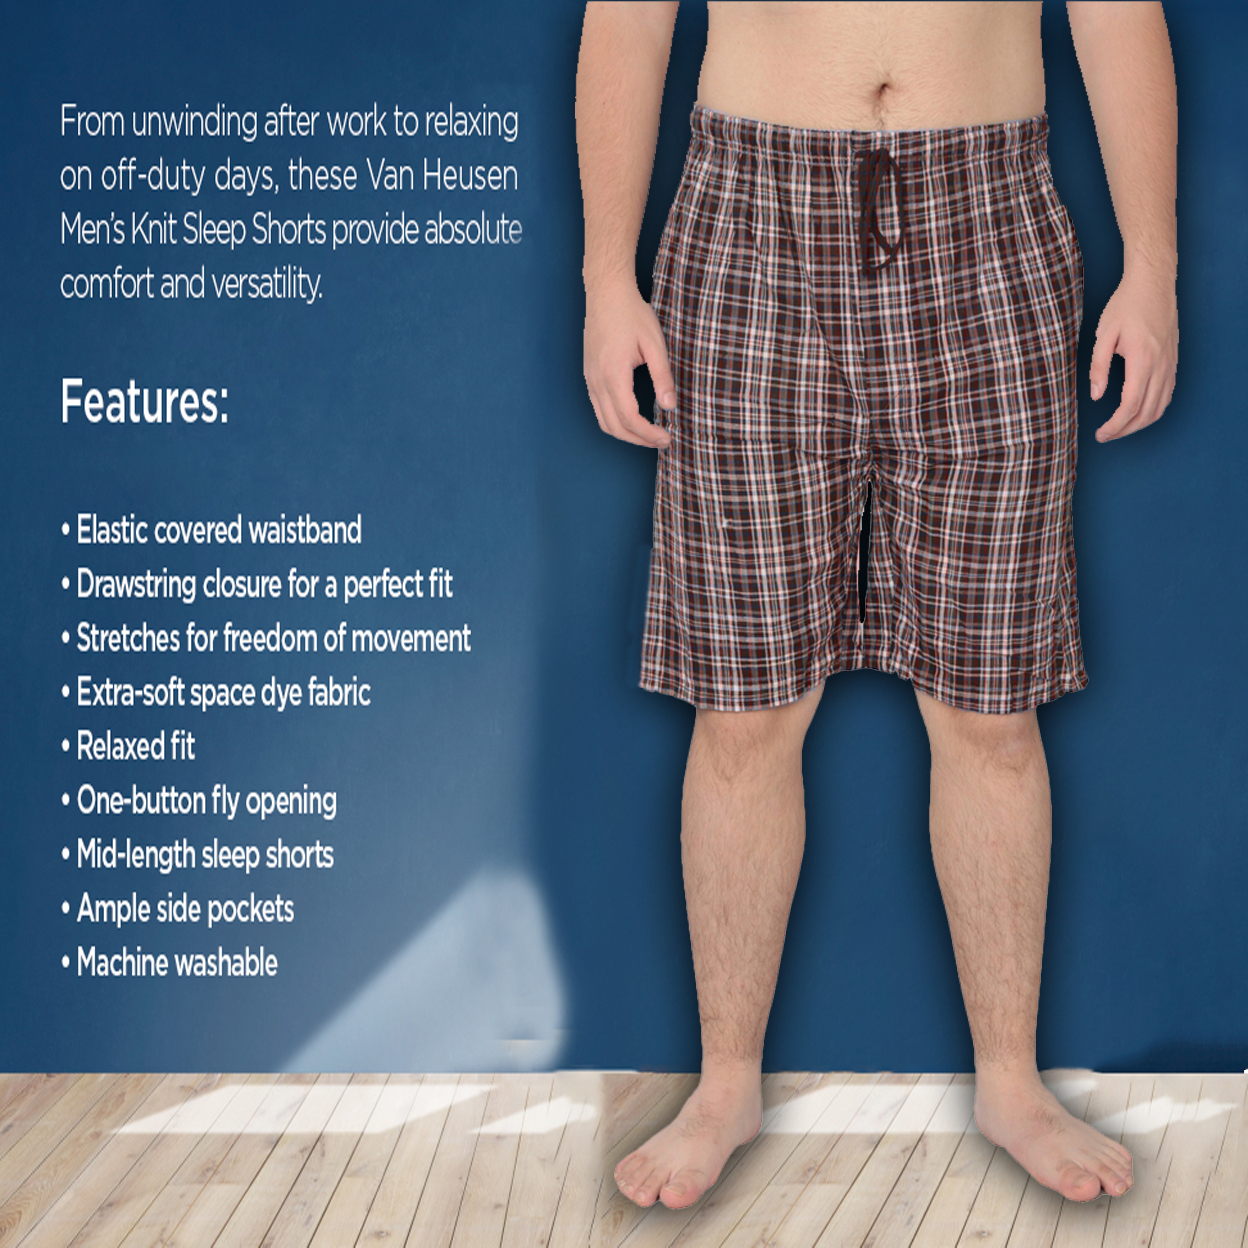 Multi-Pack: Men's Ultra-Soft Jersey Knit Sleep Lounge Pajama Shorts For Sleepwear - Plaid, 3 Pack, X-Large